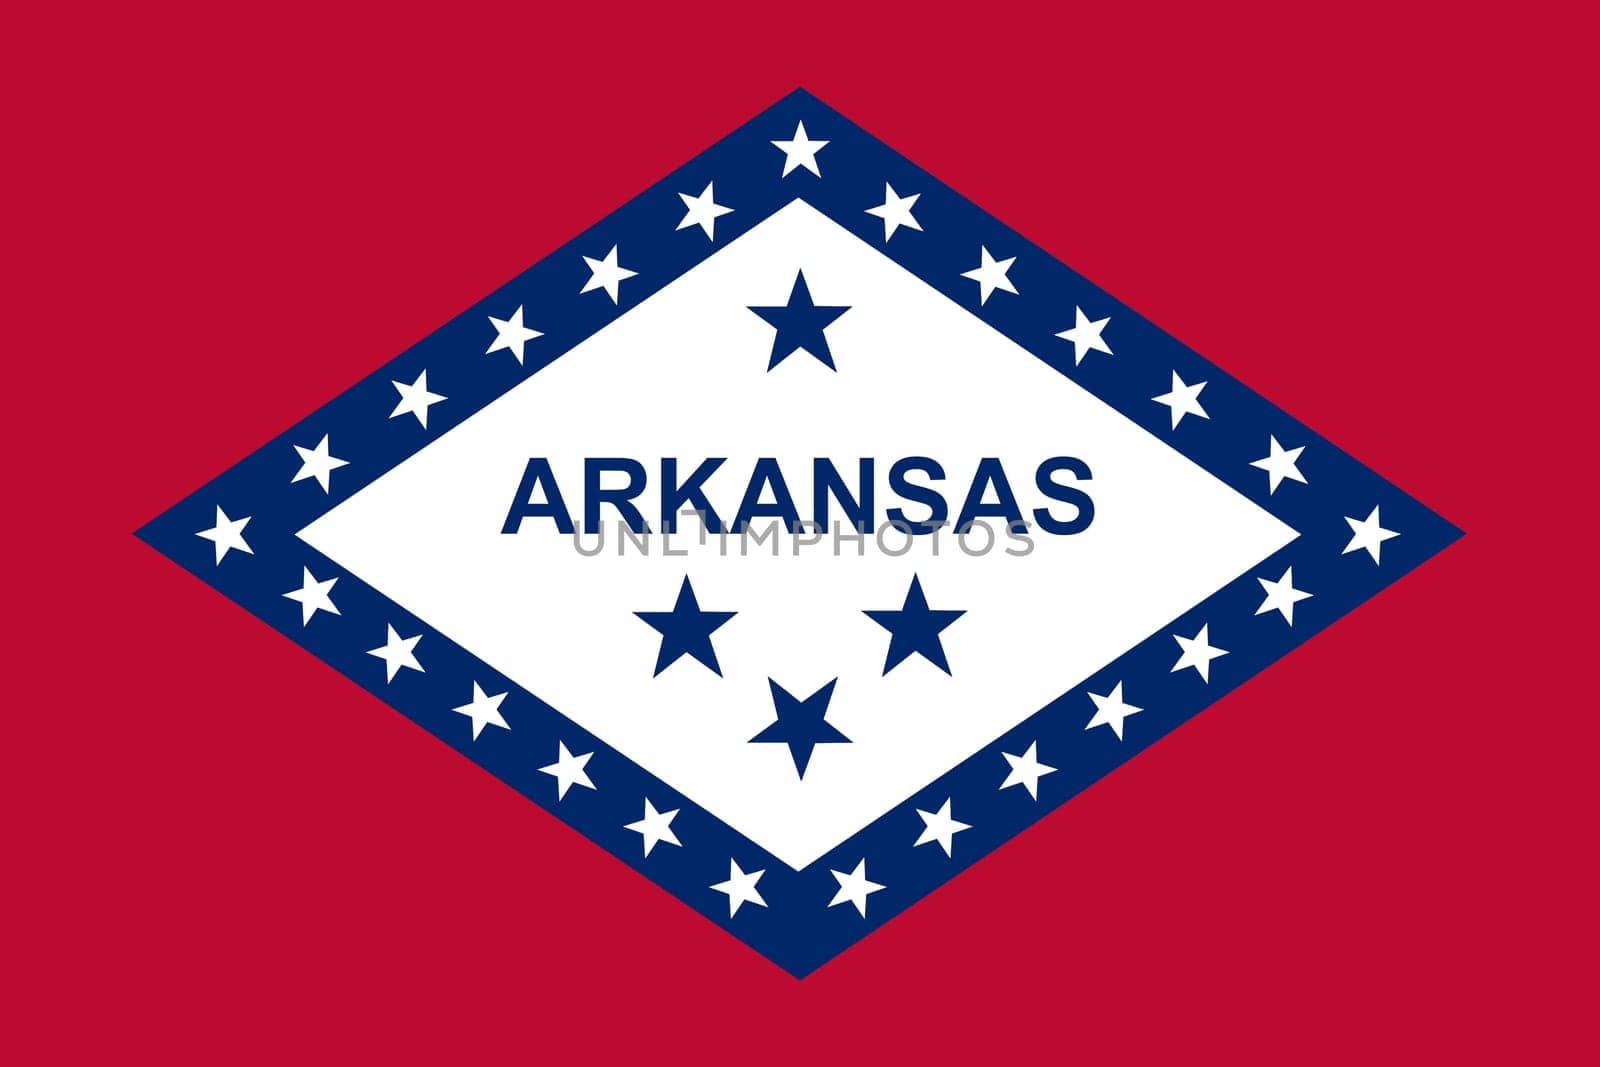 Arkansas State Flag background illustration by VivacityImages